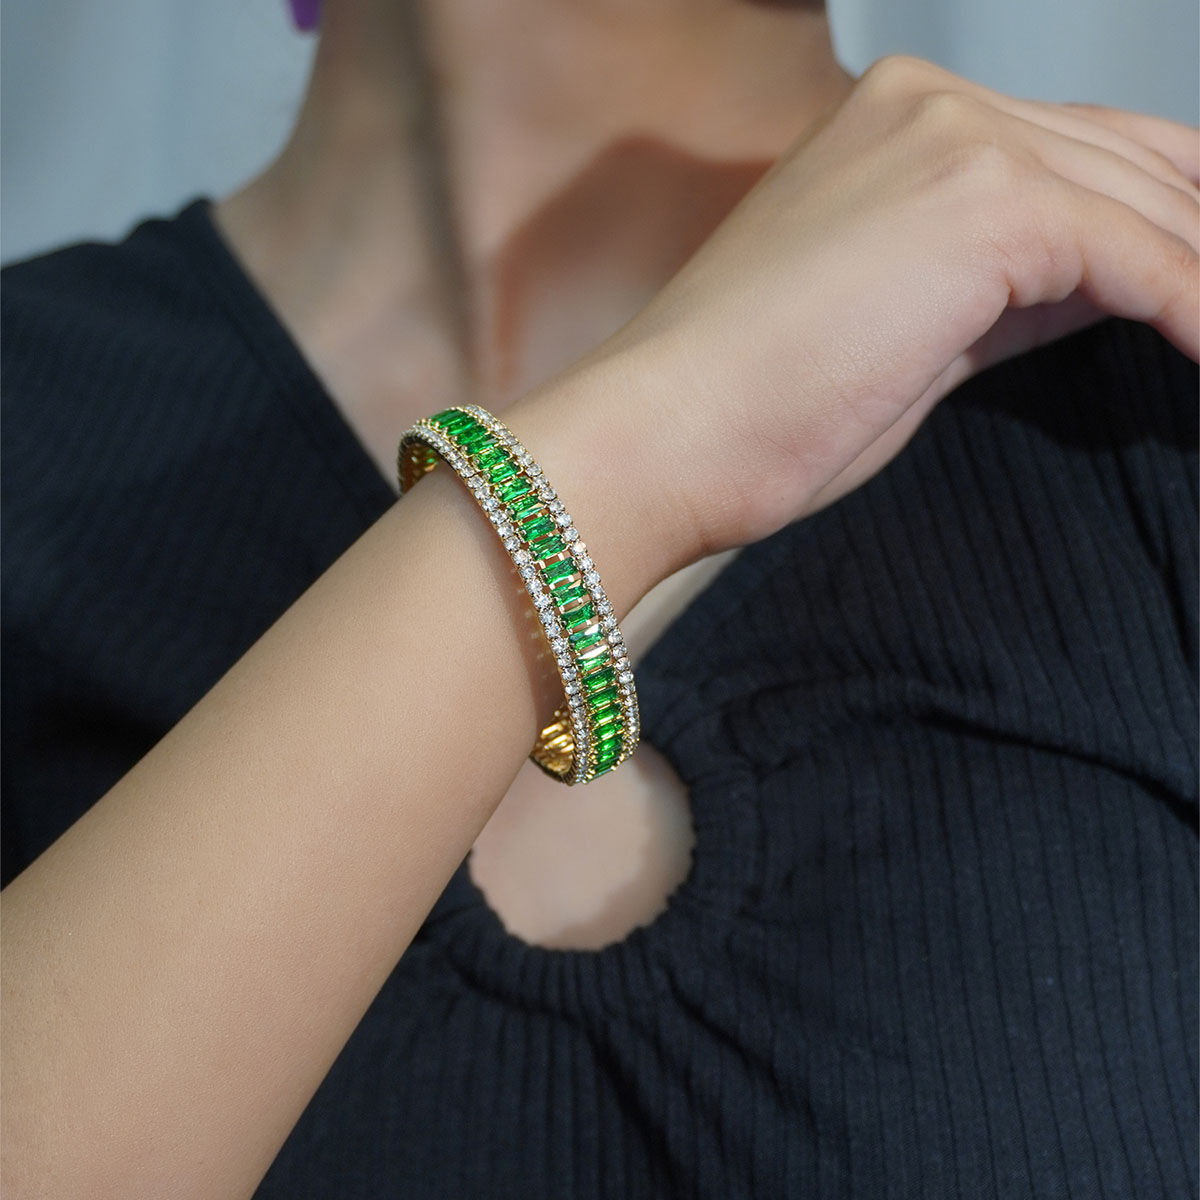 Niscka Princess Cut Emerald Gold Bracelet Buy Niscka Princess Cut Emerald Gold  Bracelet Online at Best Price in India  Nykaa